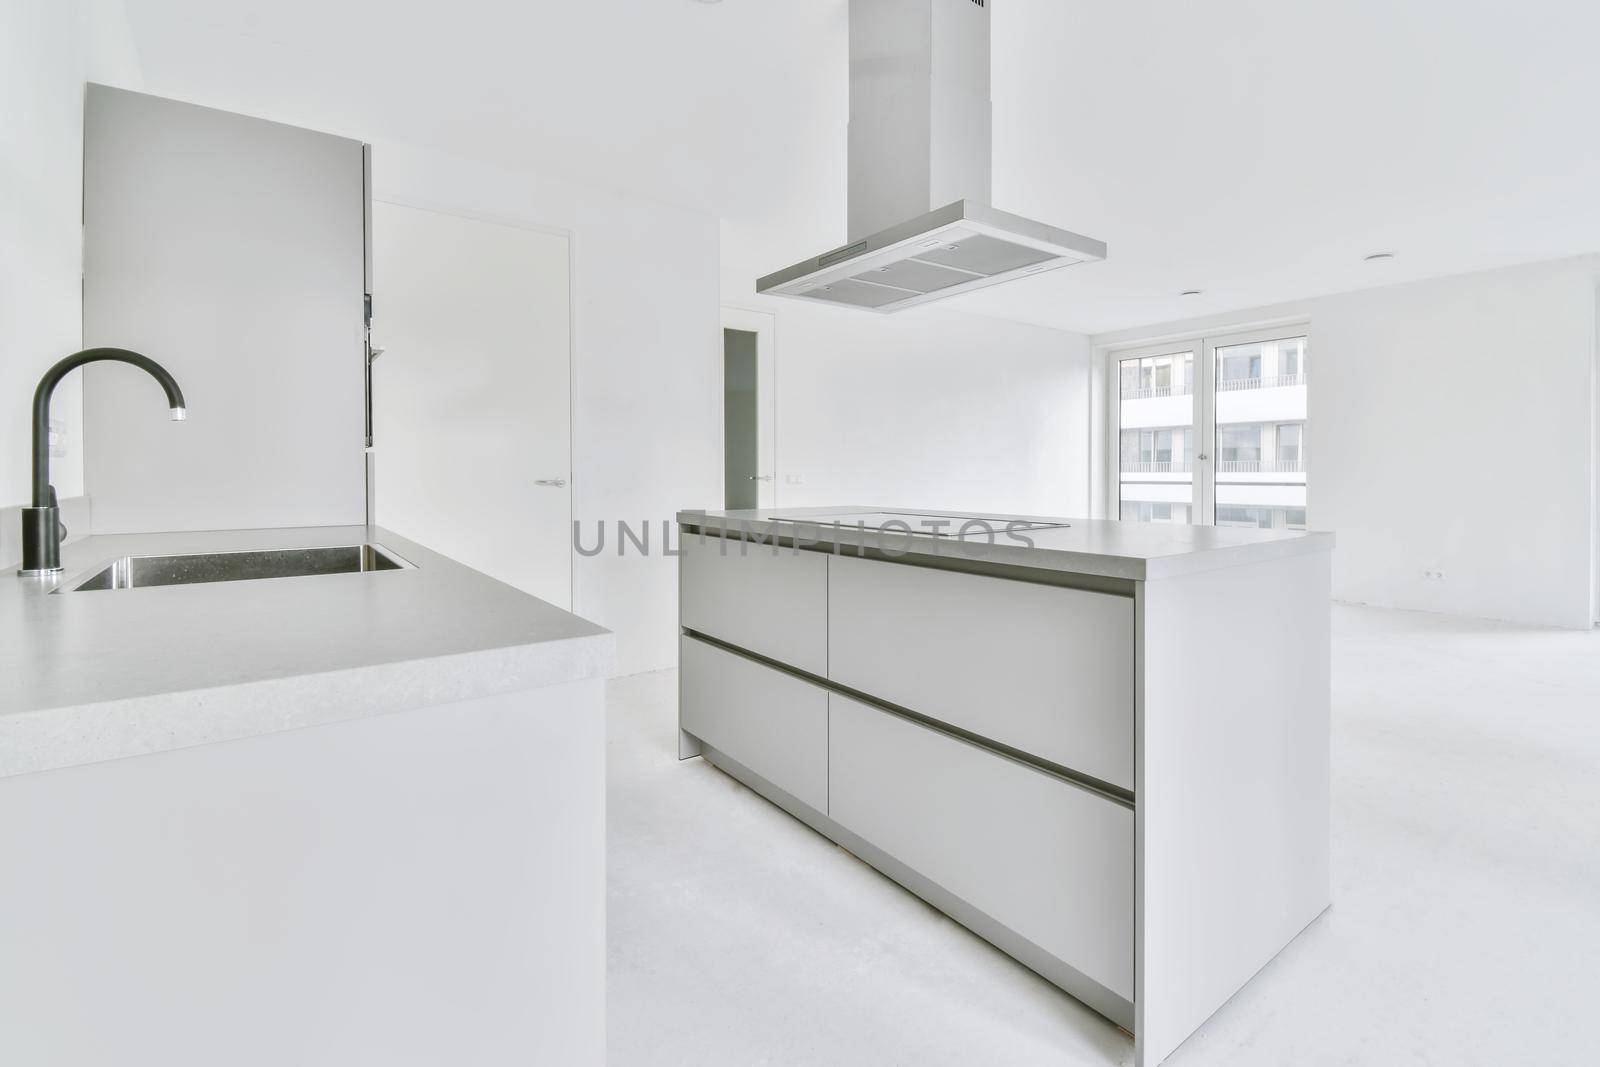 Snow-white kitchen area in a large elegant apartment